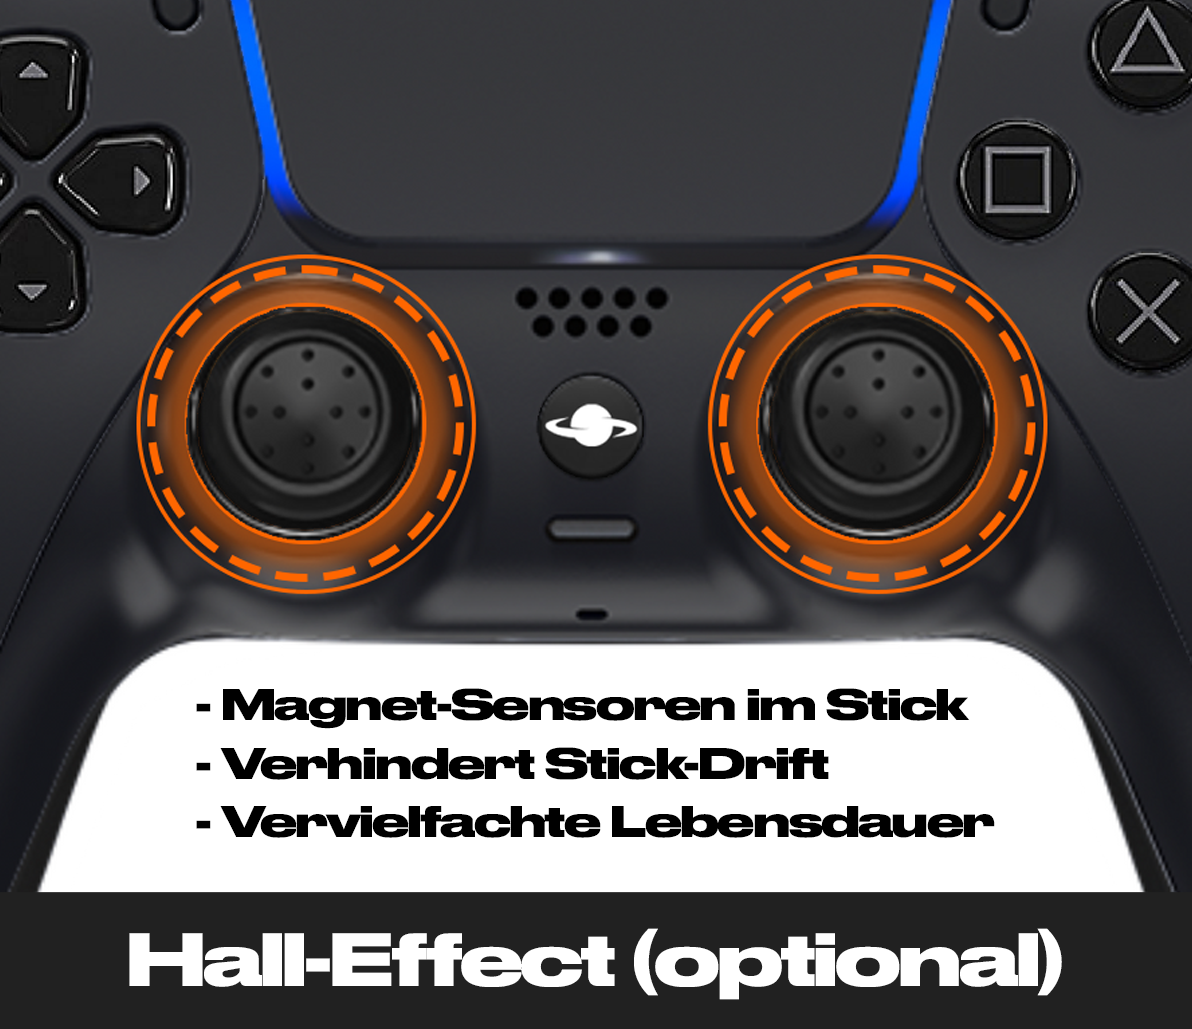 PS5 Custom Controller 'Chaos-Dimension'